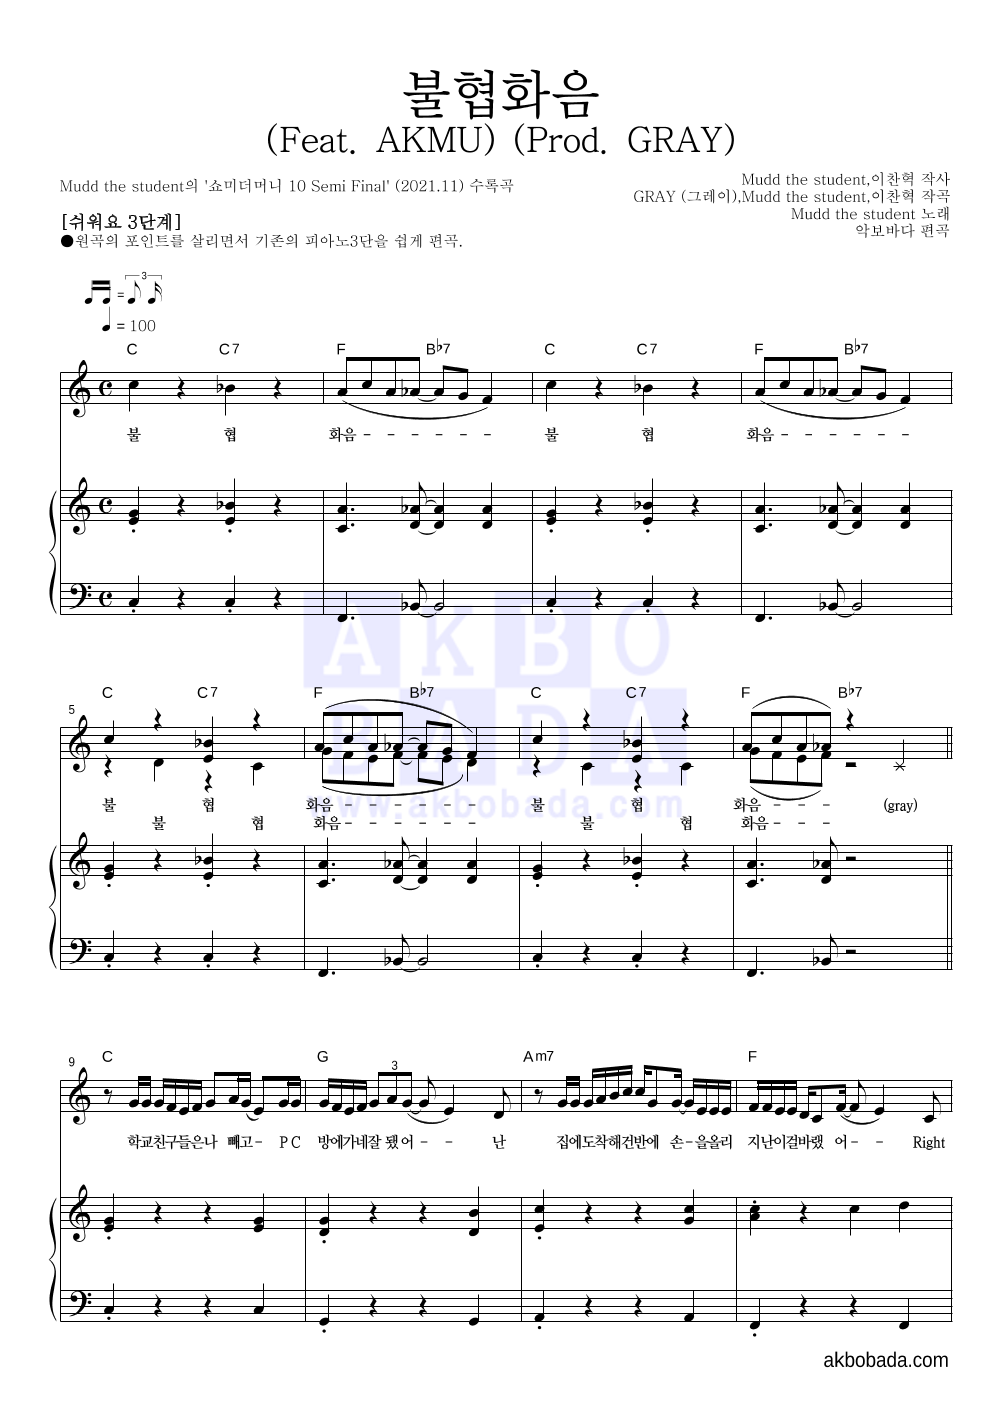 Mudd the student - 불협화음 (Feat. AKMU) (Prod. GRAY) 피아노3단-쉬워요 악보 